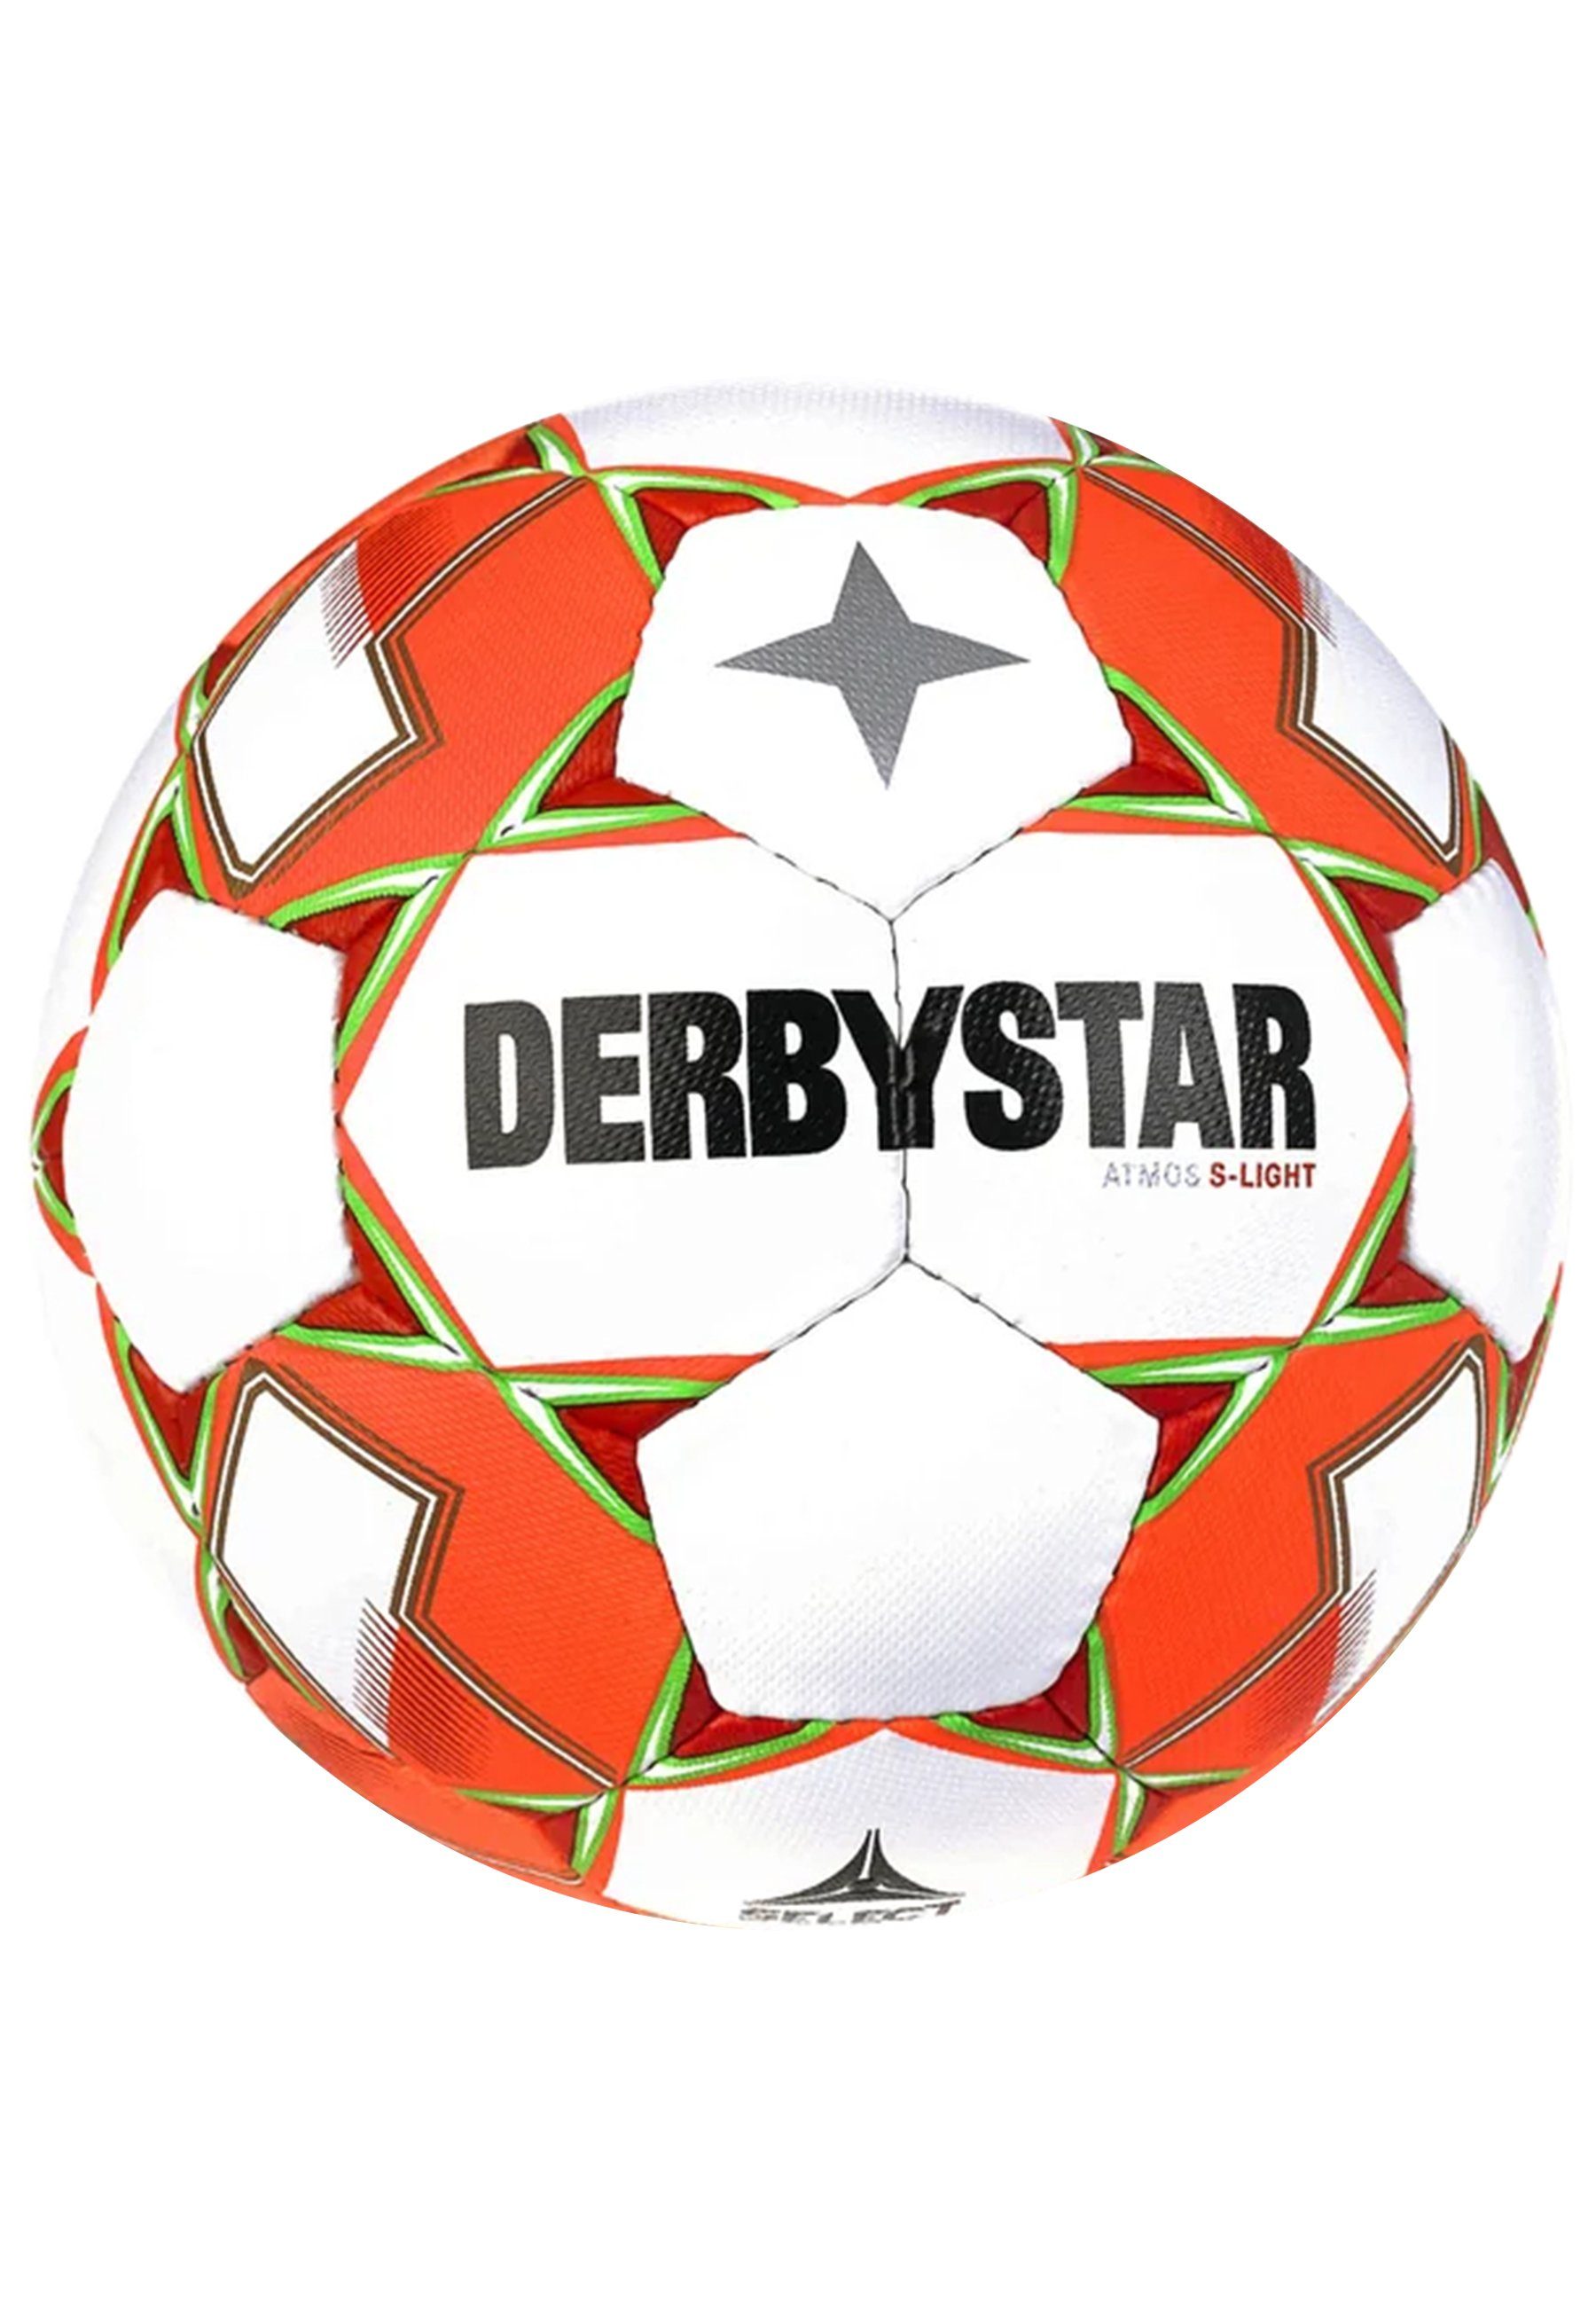 Größe S-Light Derbystar Atmos Fußball AG 4